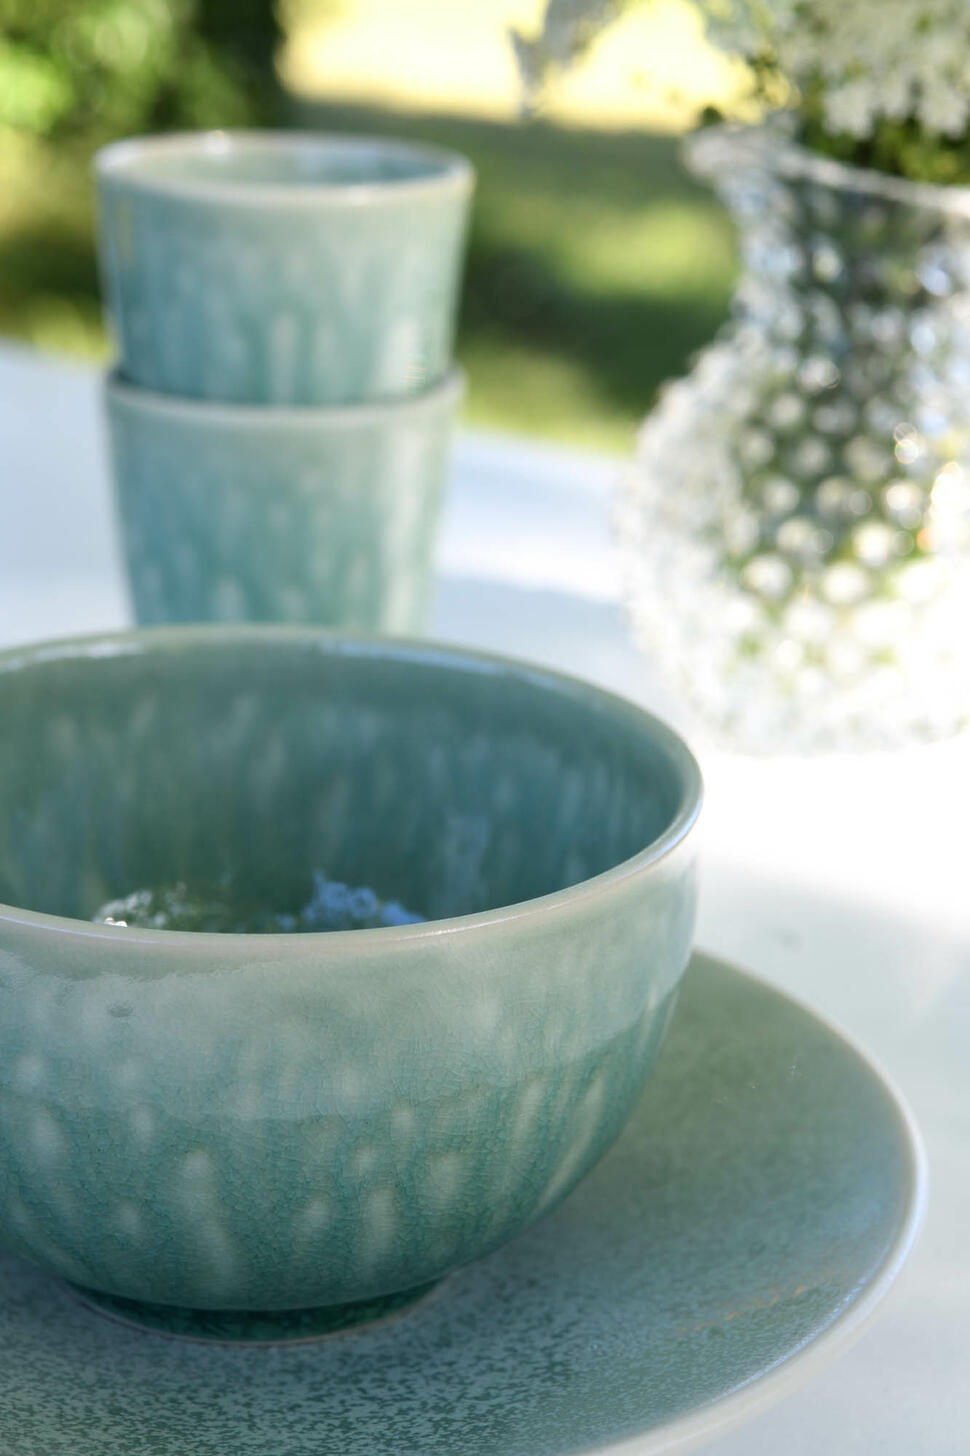 bowl l tourron jade ceramic manufacturer